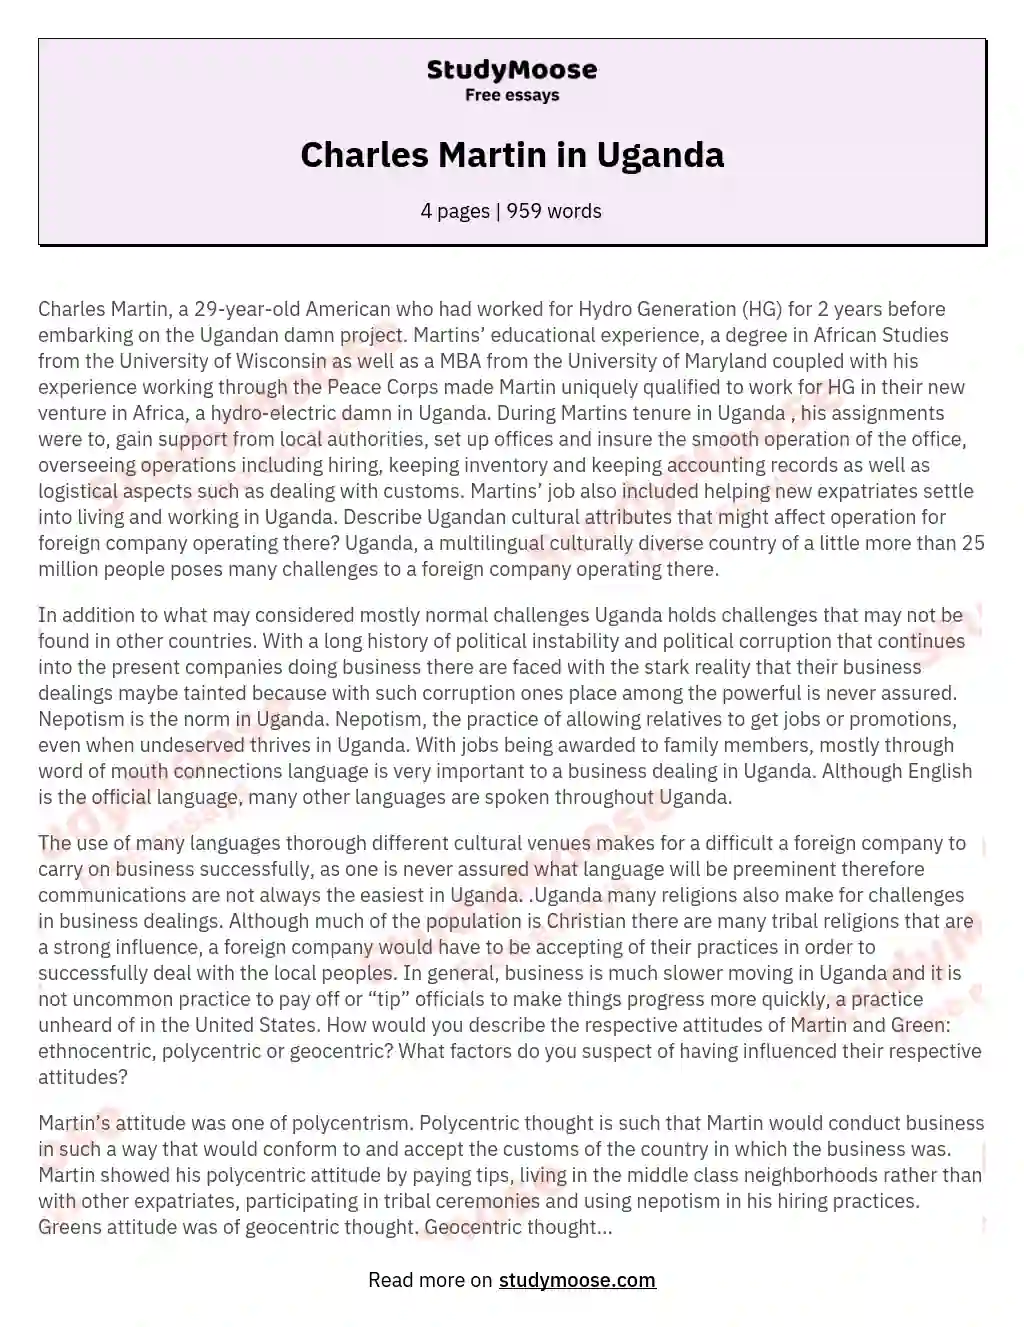 Charles Martin in Uganda essay